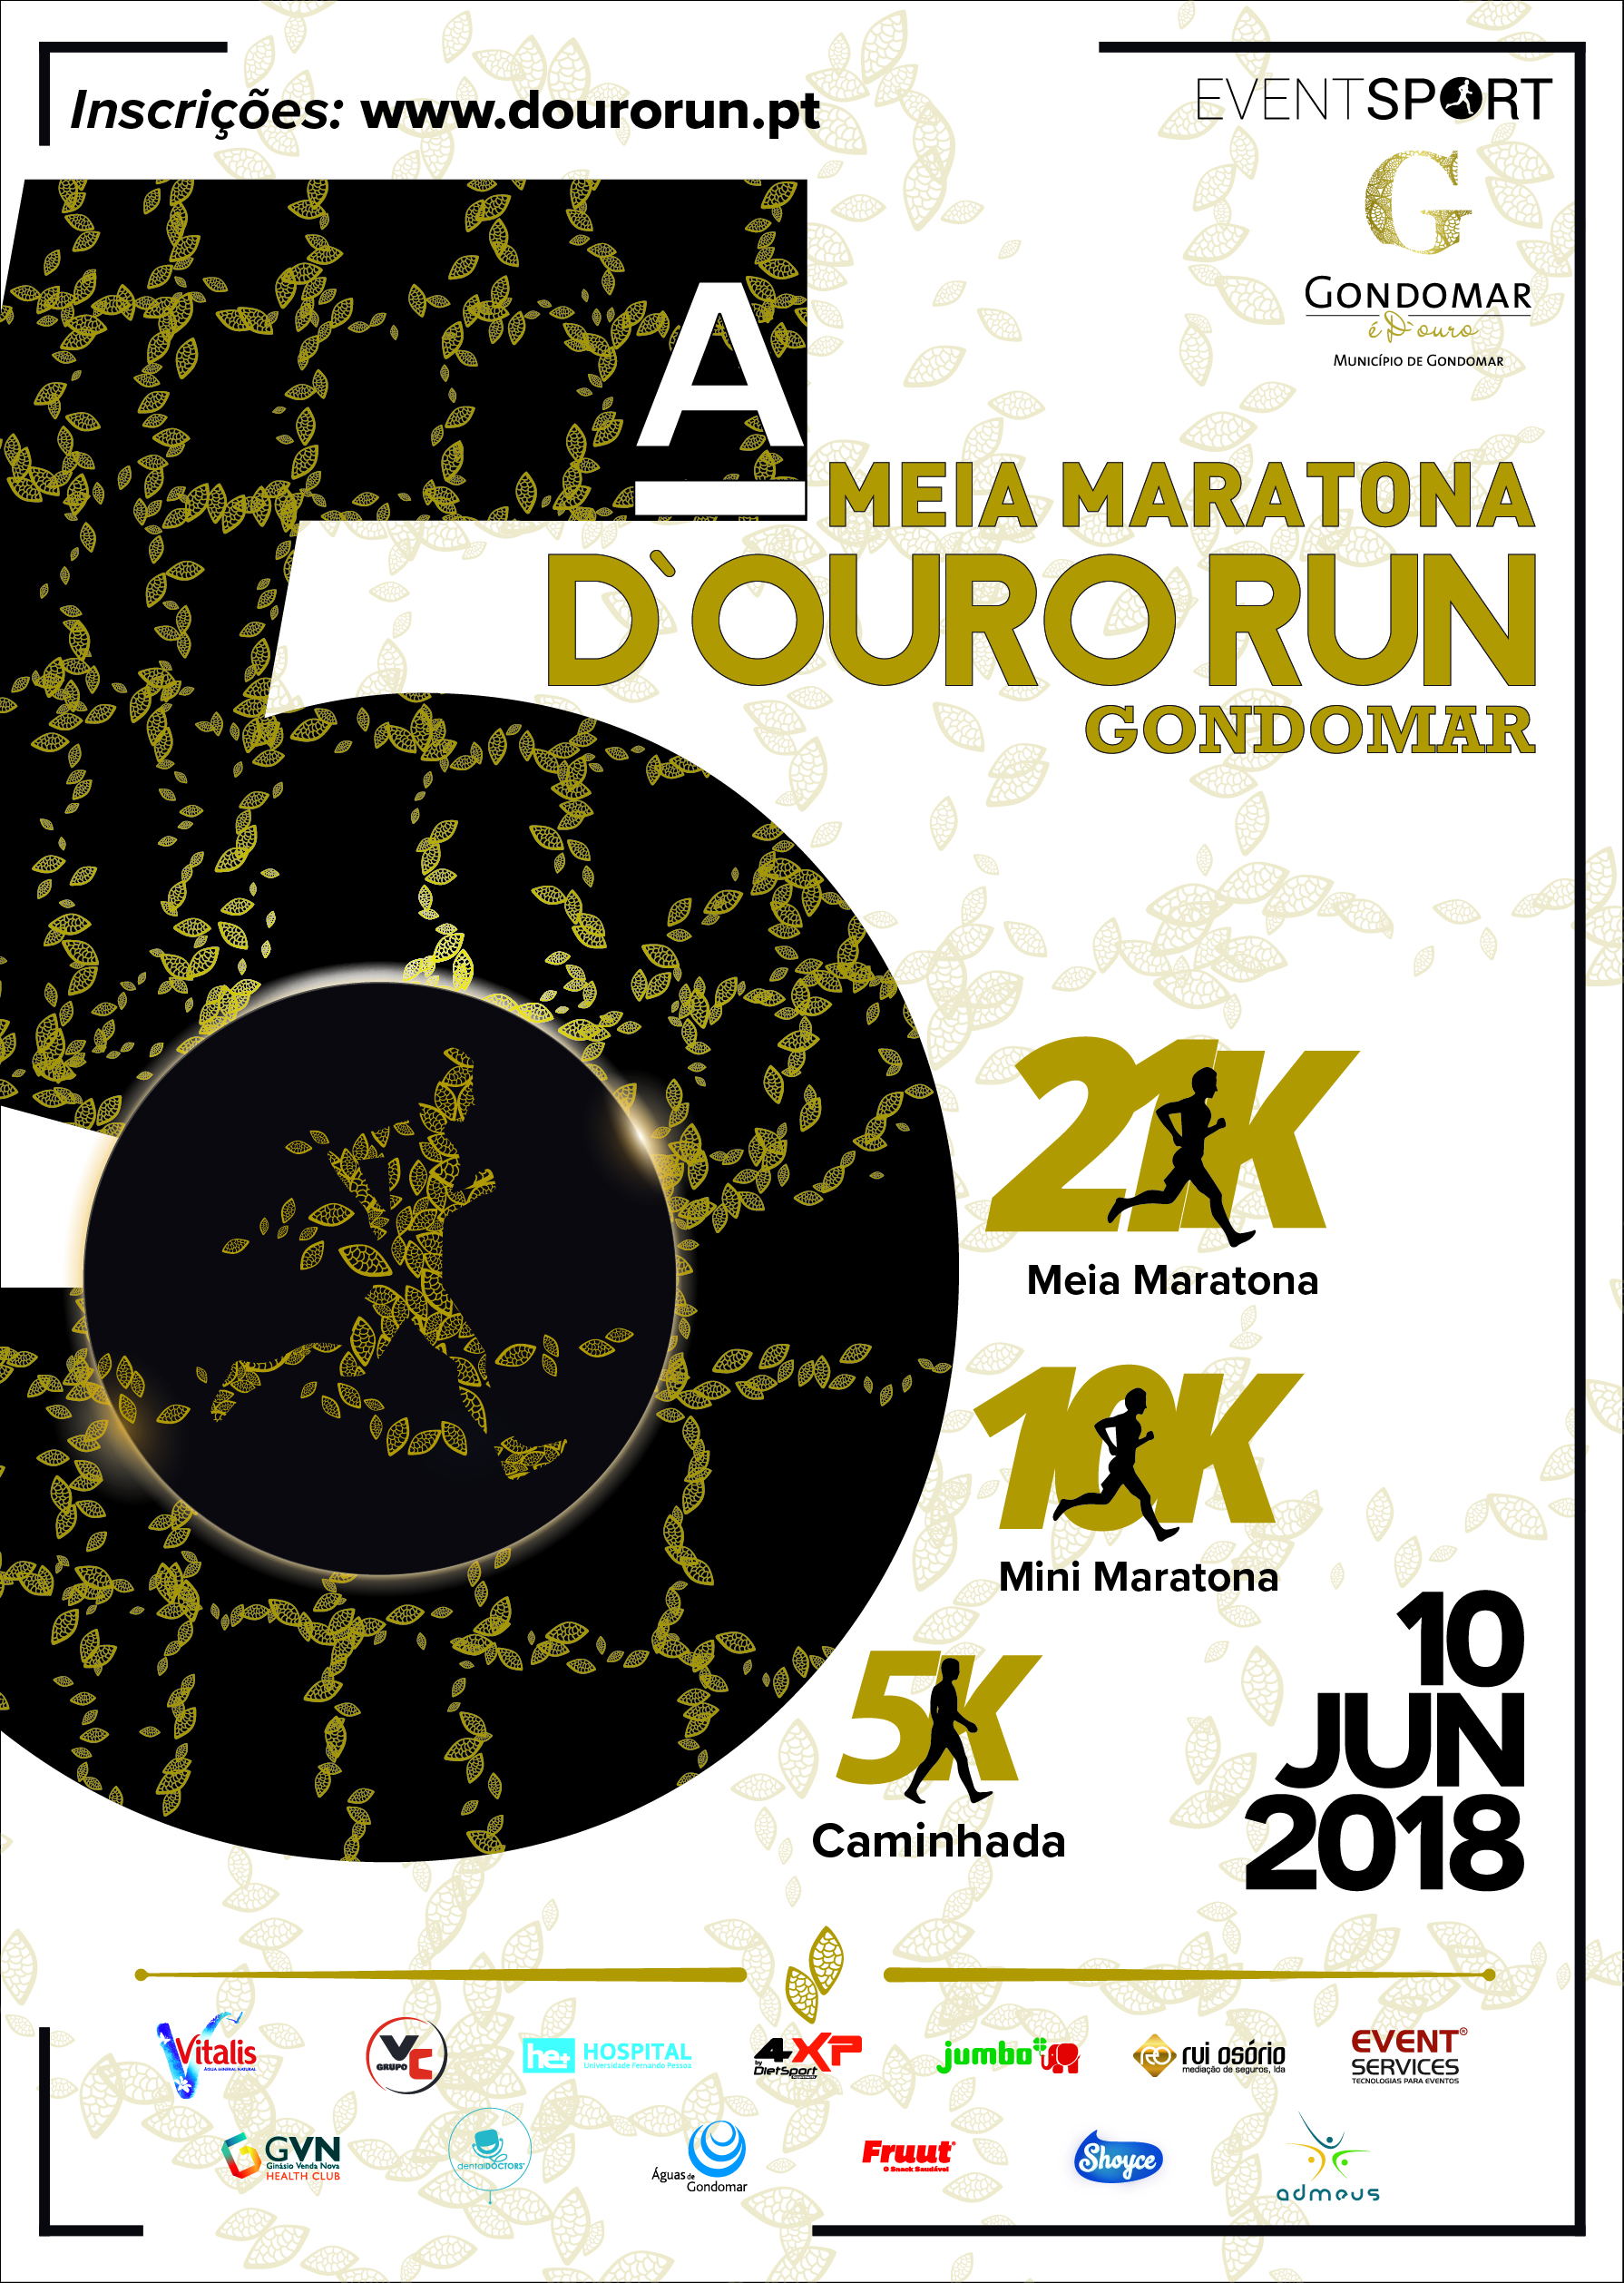 Galeria de Fotos - Está de volta a 5ª Meia-Maratona D’Ouro Run Gondomar!